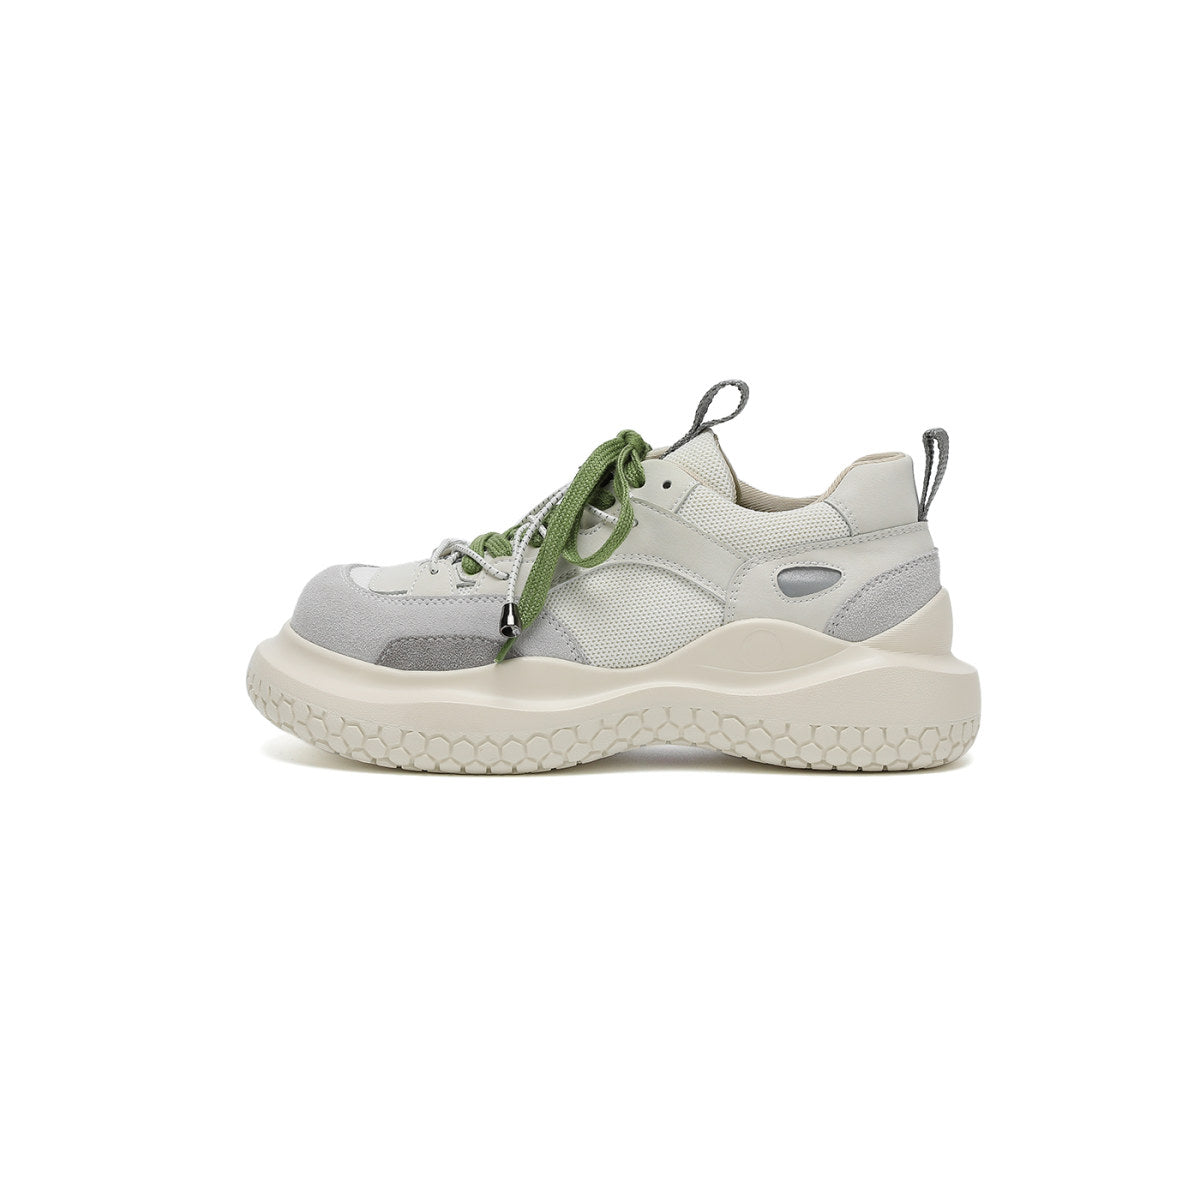 Honeycomb White Turbo Sneakers